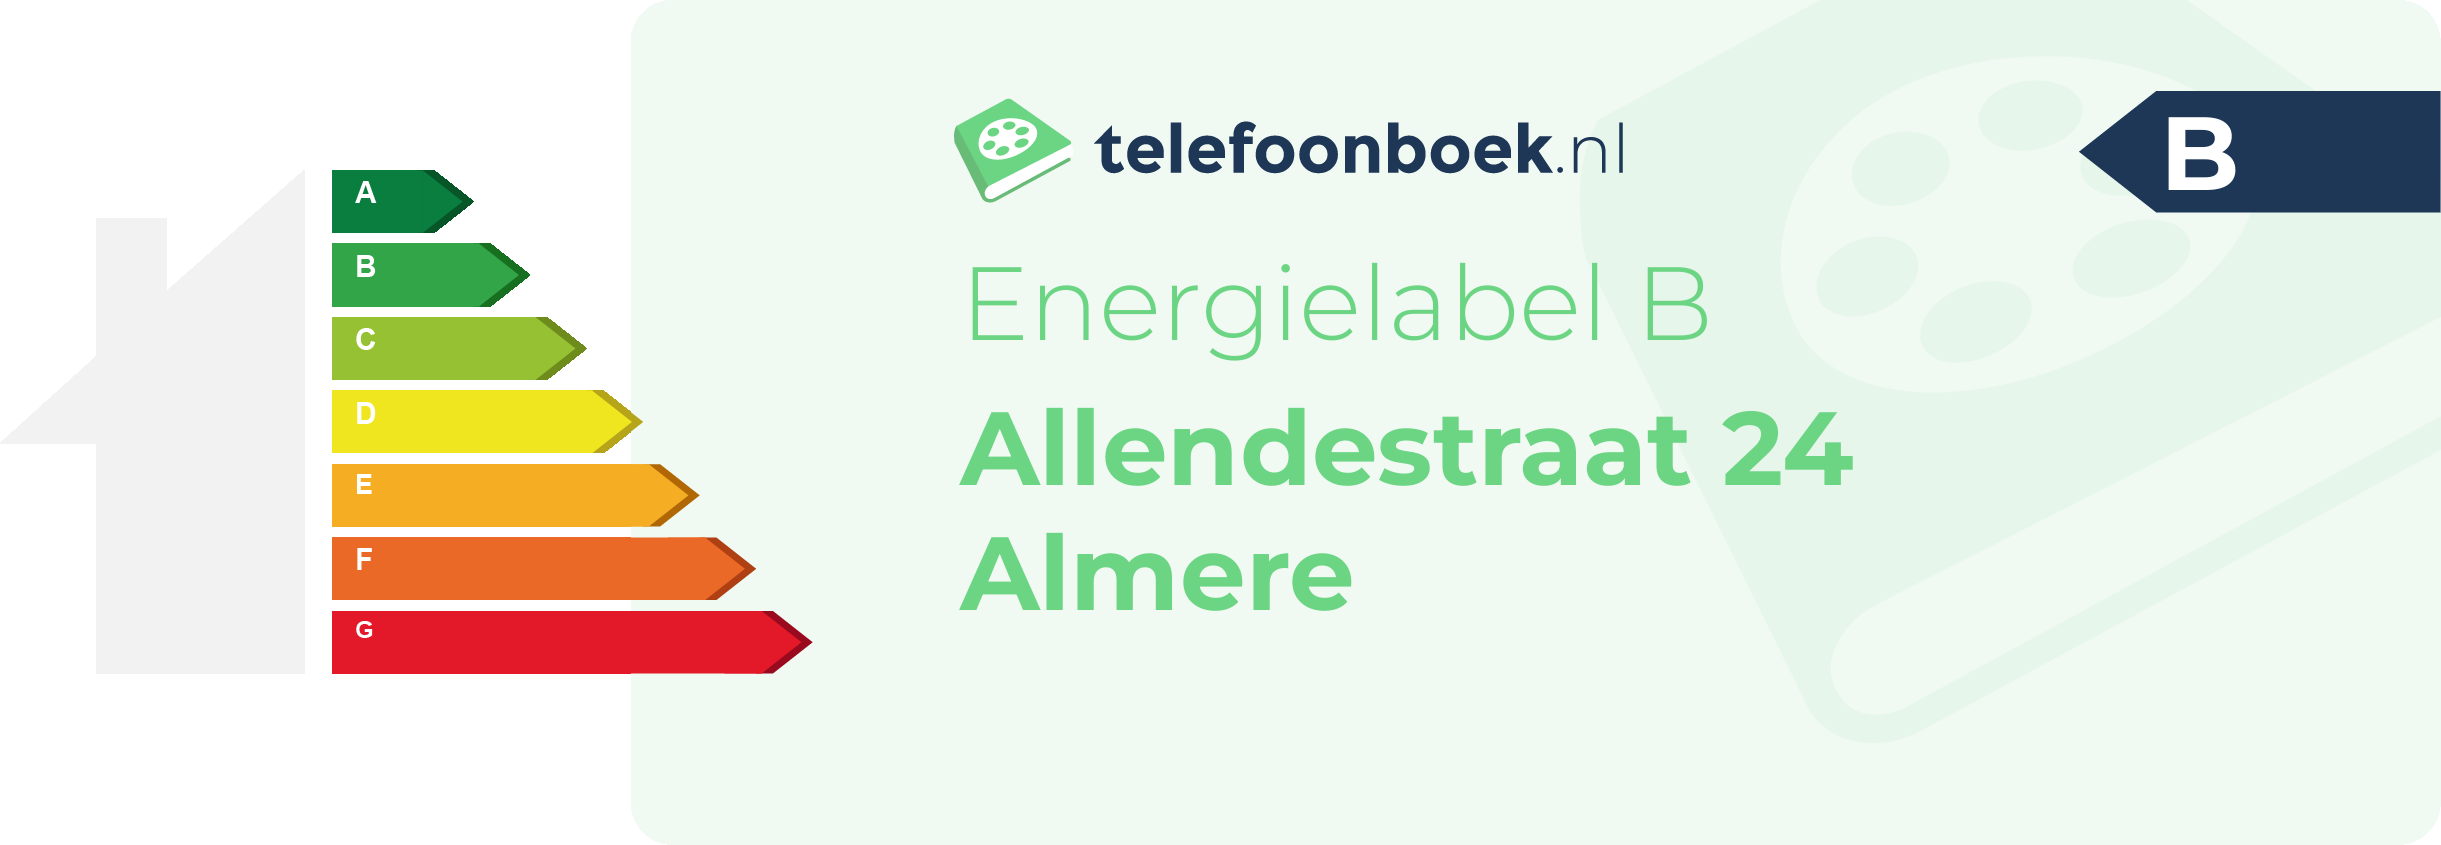 Energielabel Allendestraat 24 Almere